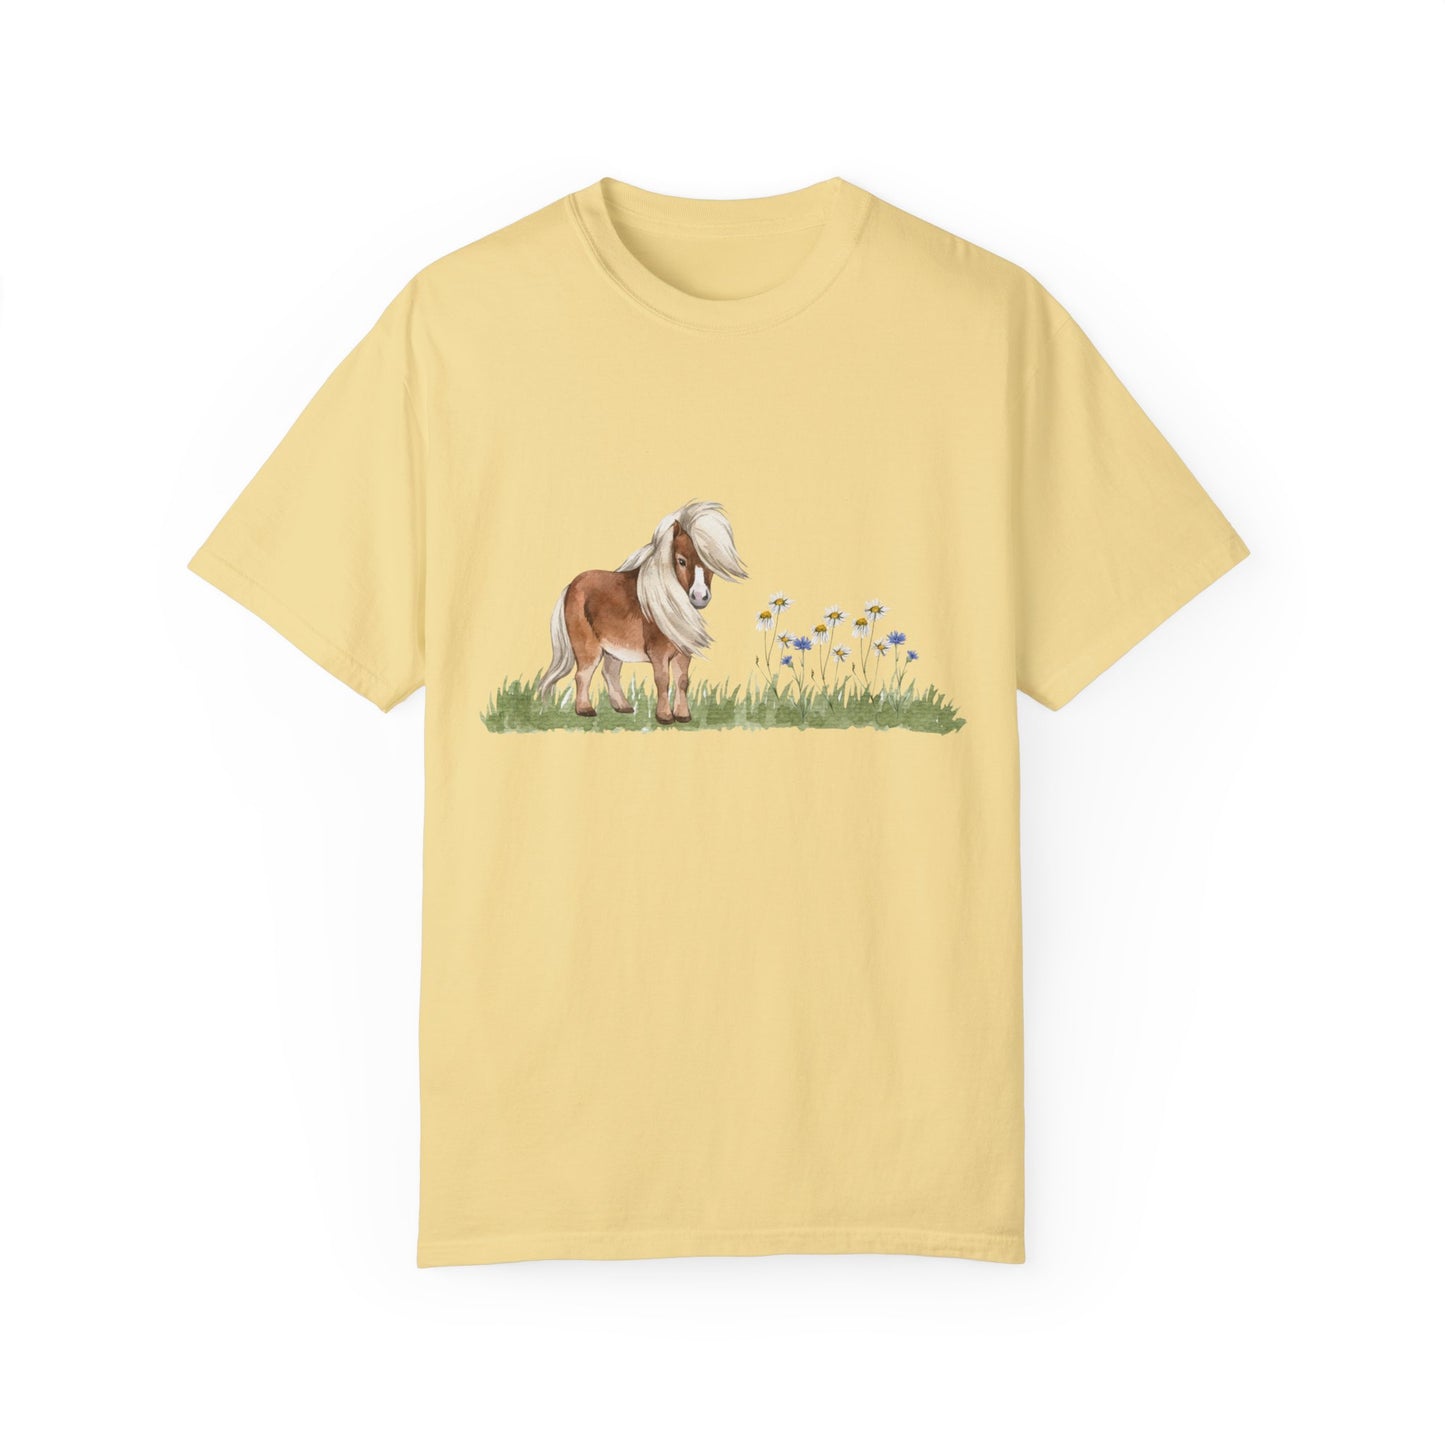 Horse In Field Shirt